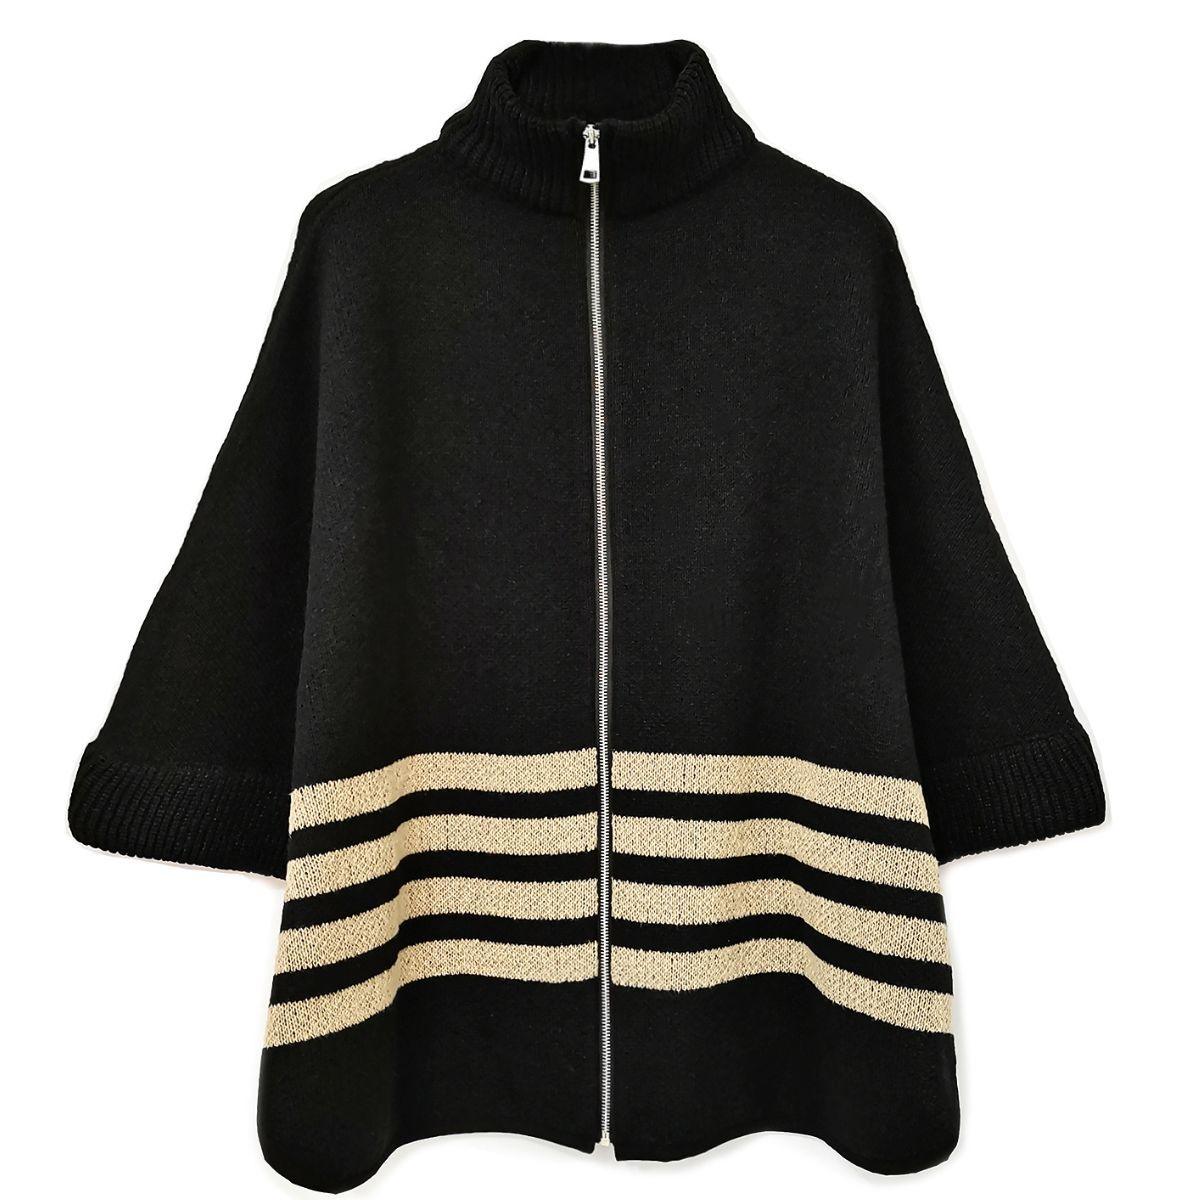 Get Cozy in Black Kimono Style Outerwear for Women - Order Now!